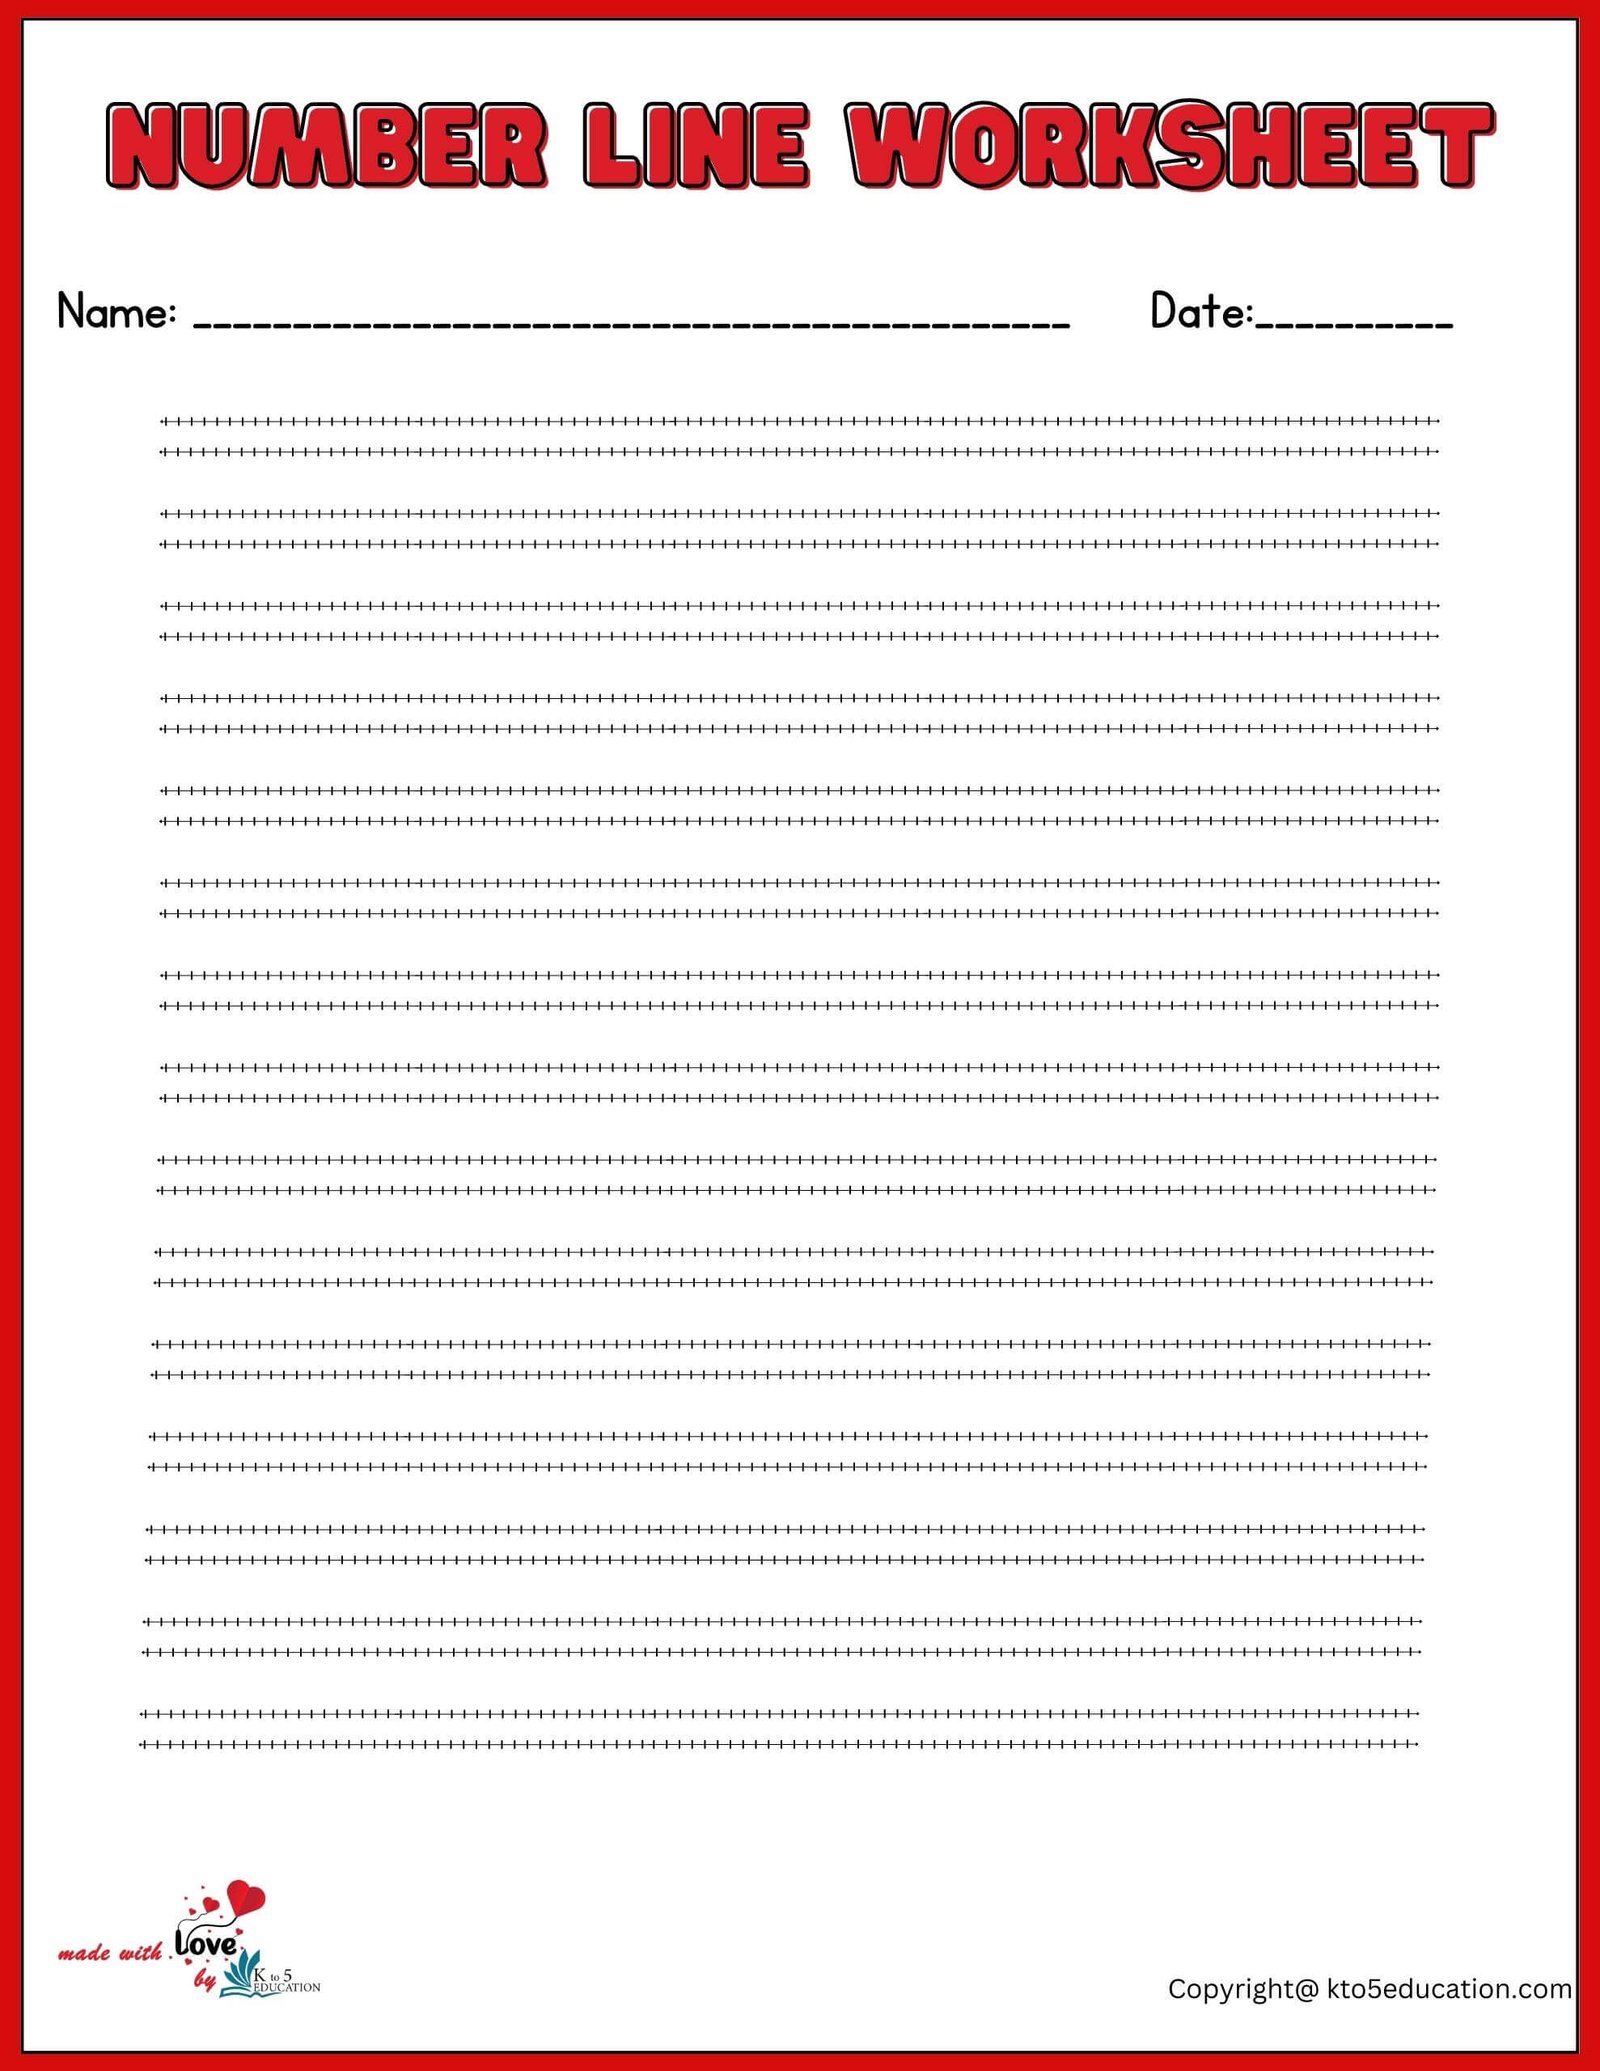 Free Double Number Line Printable Worksheet 1-100